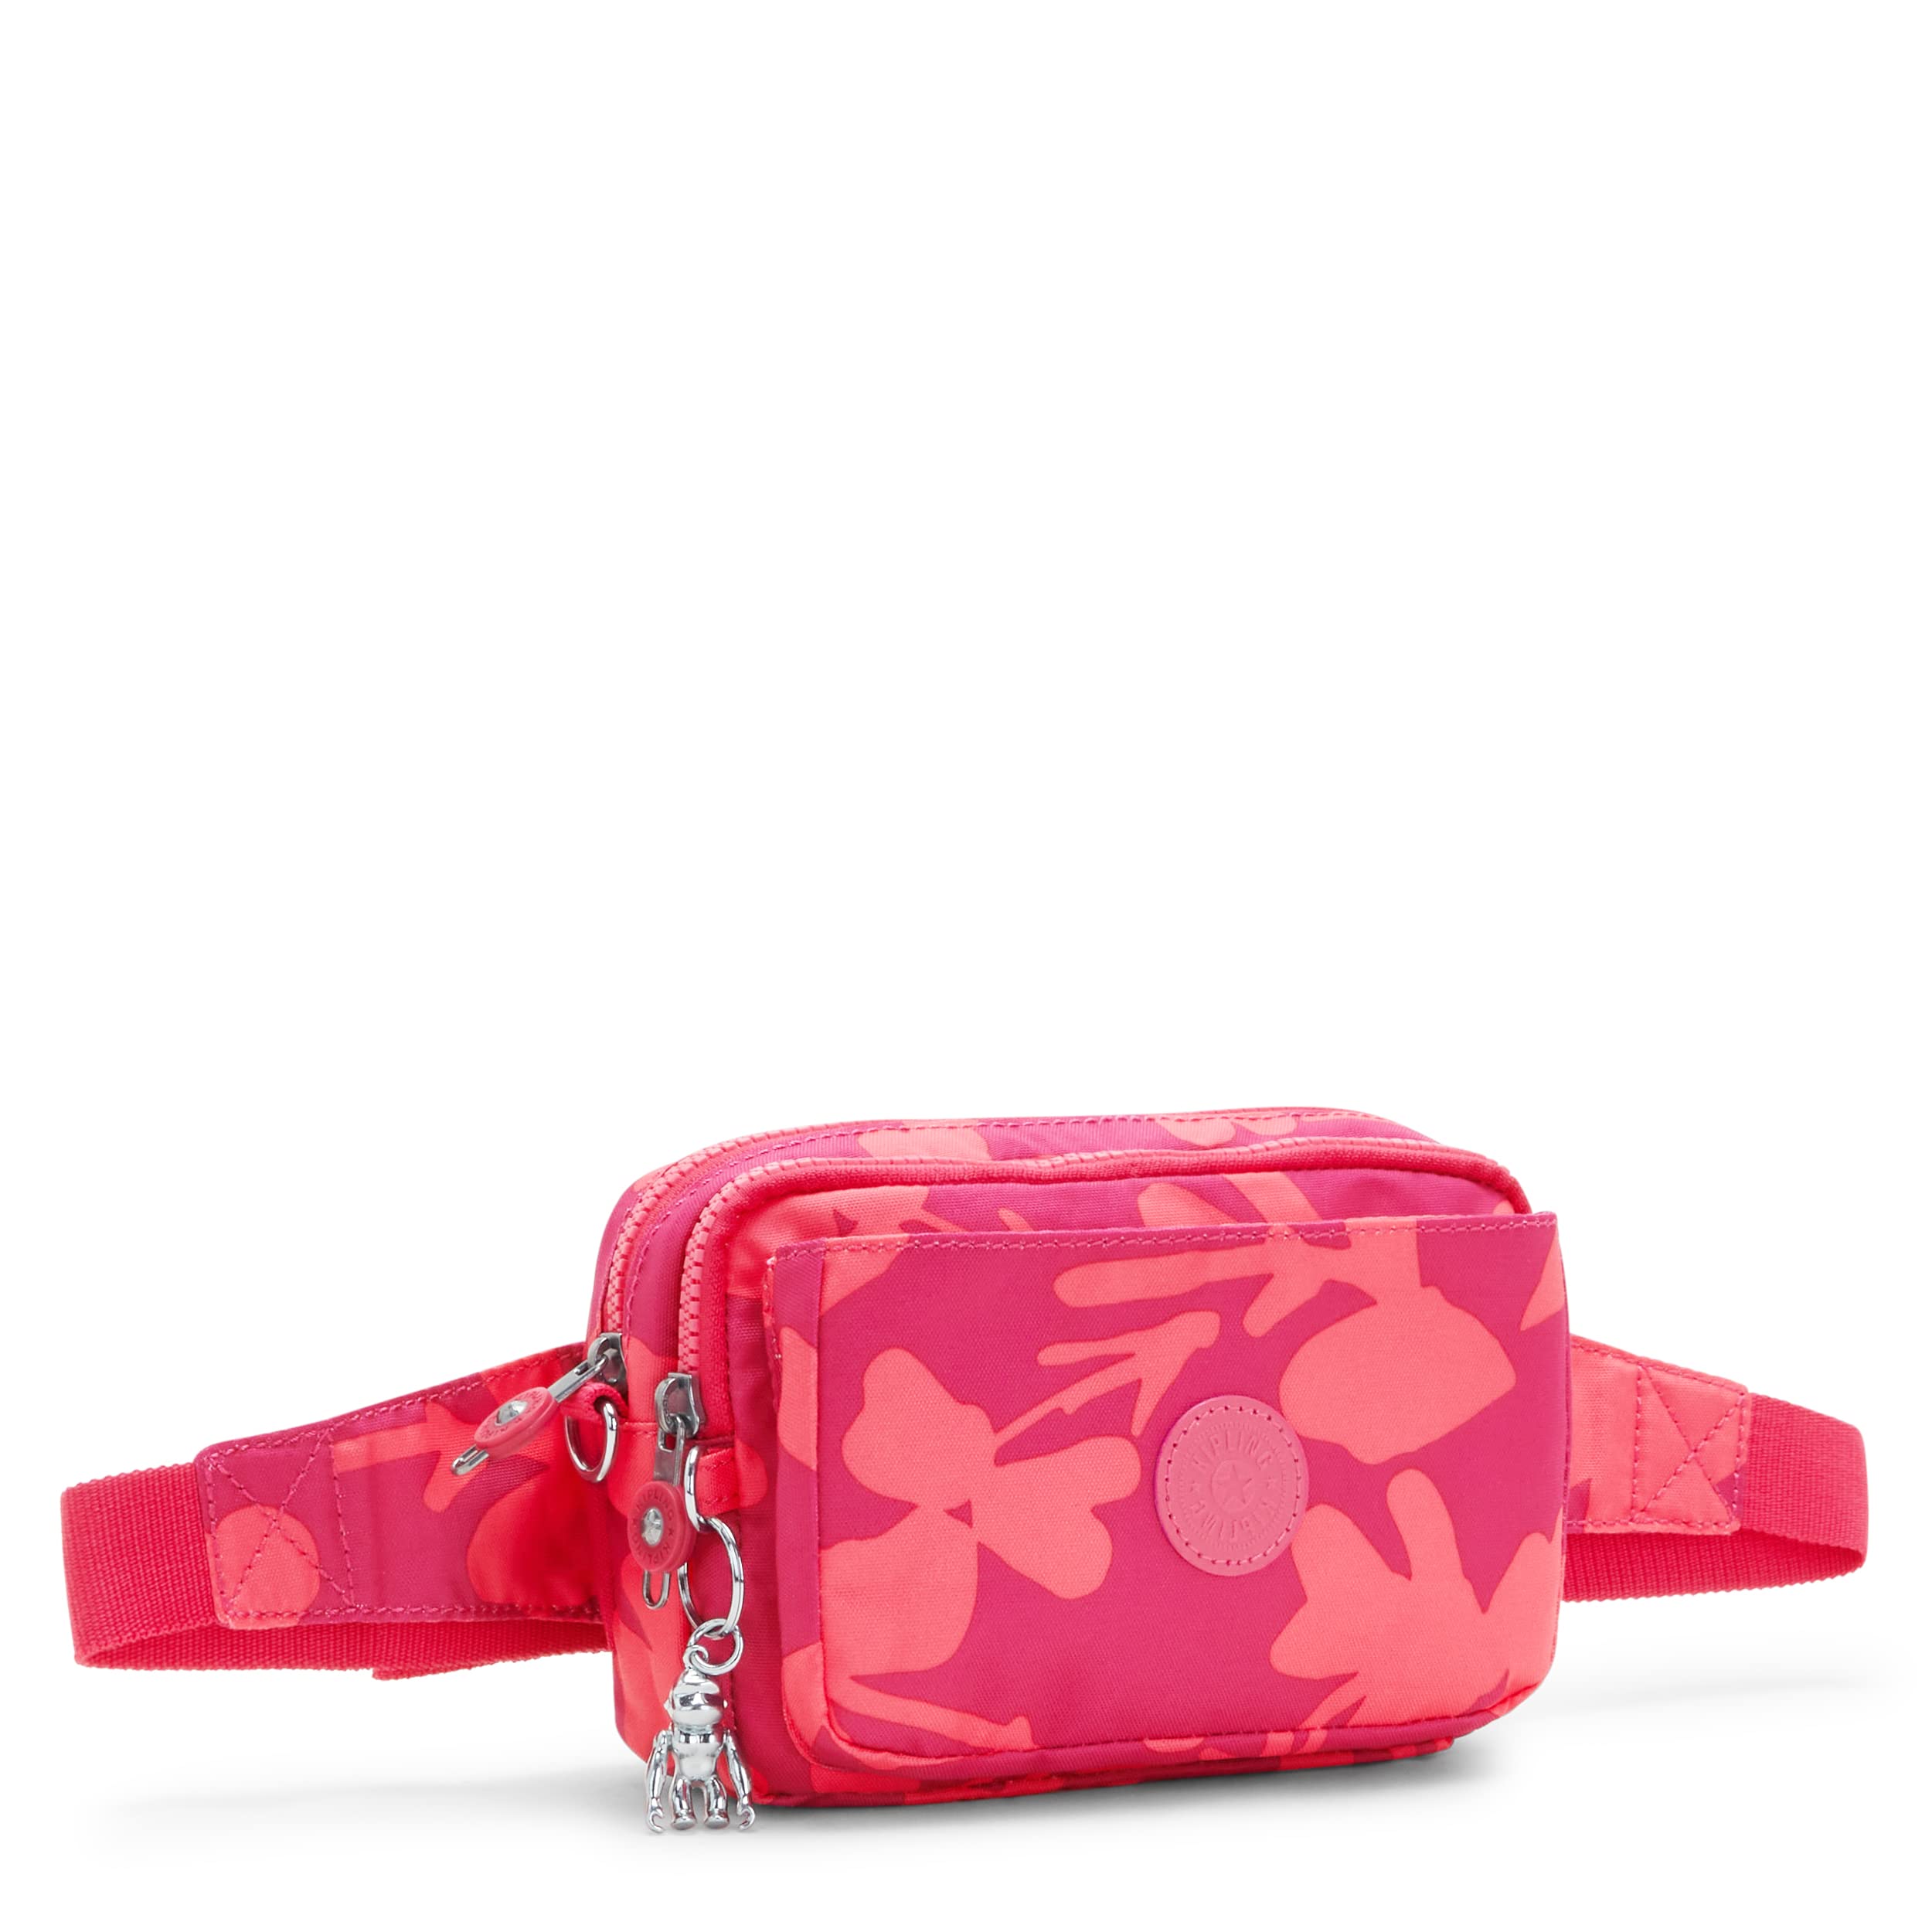 Kipling Women's Abanu Crossbody Bag, Lightweight, Adjustable Waist Pack with Multi-Compartment Zip Pockets